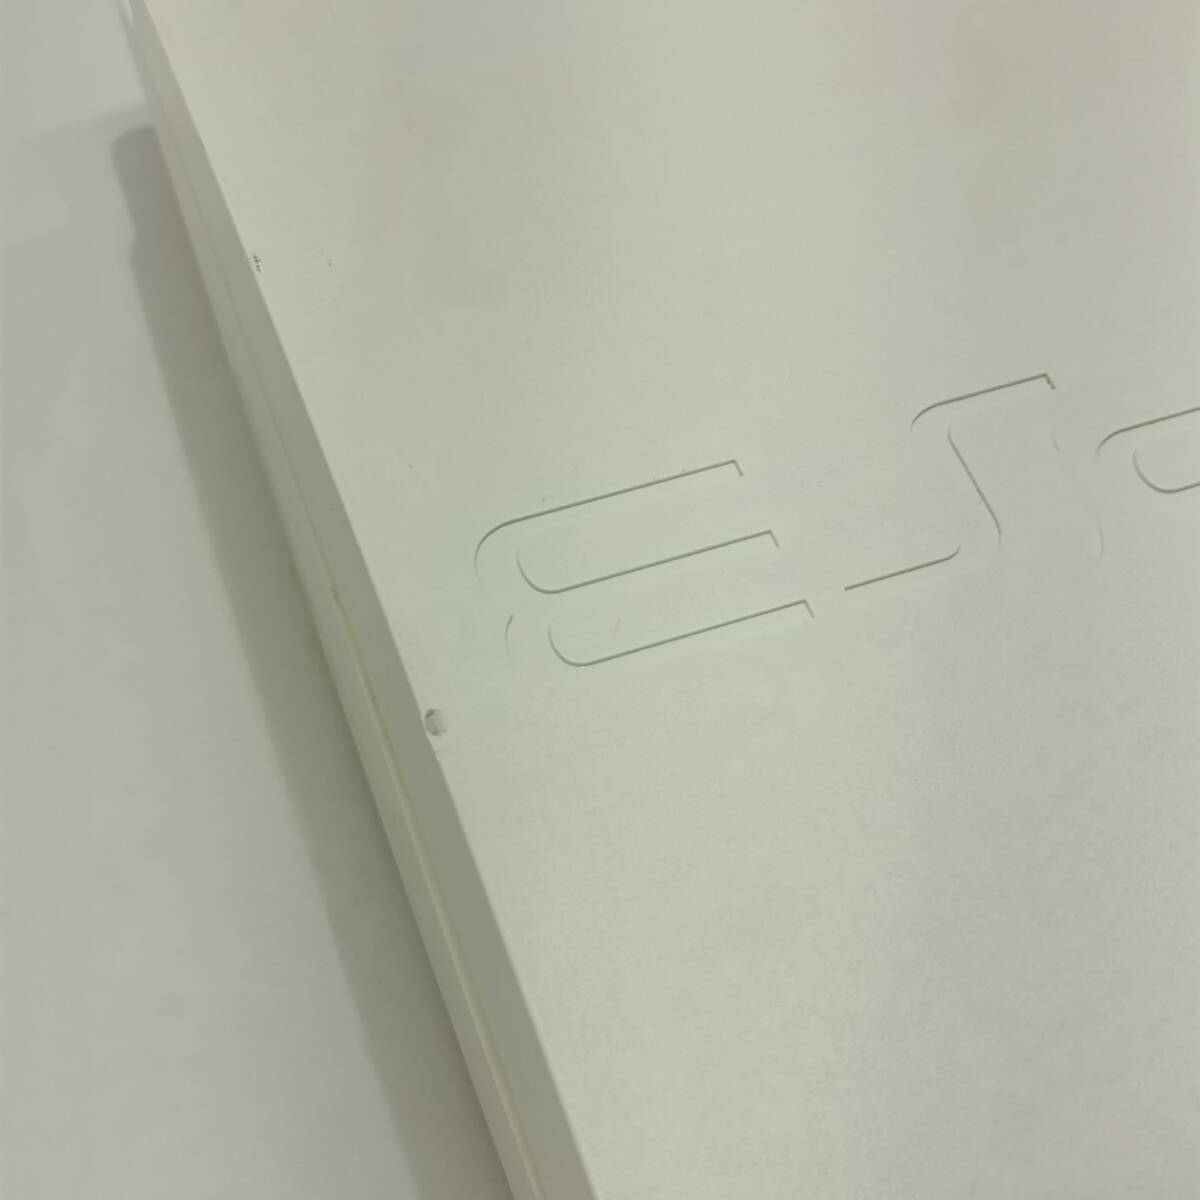 067）A〈中古品〉Playstaion3 PS3 本体のみ CECH-3000A 160GB【動作確認/初期化済】_画像10